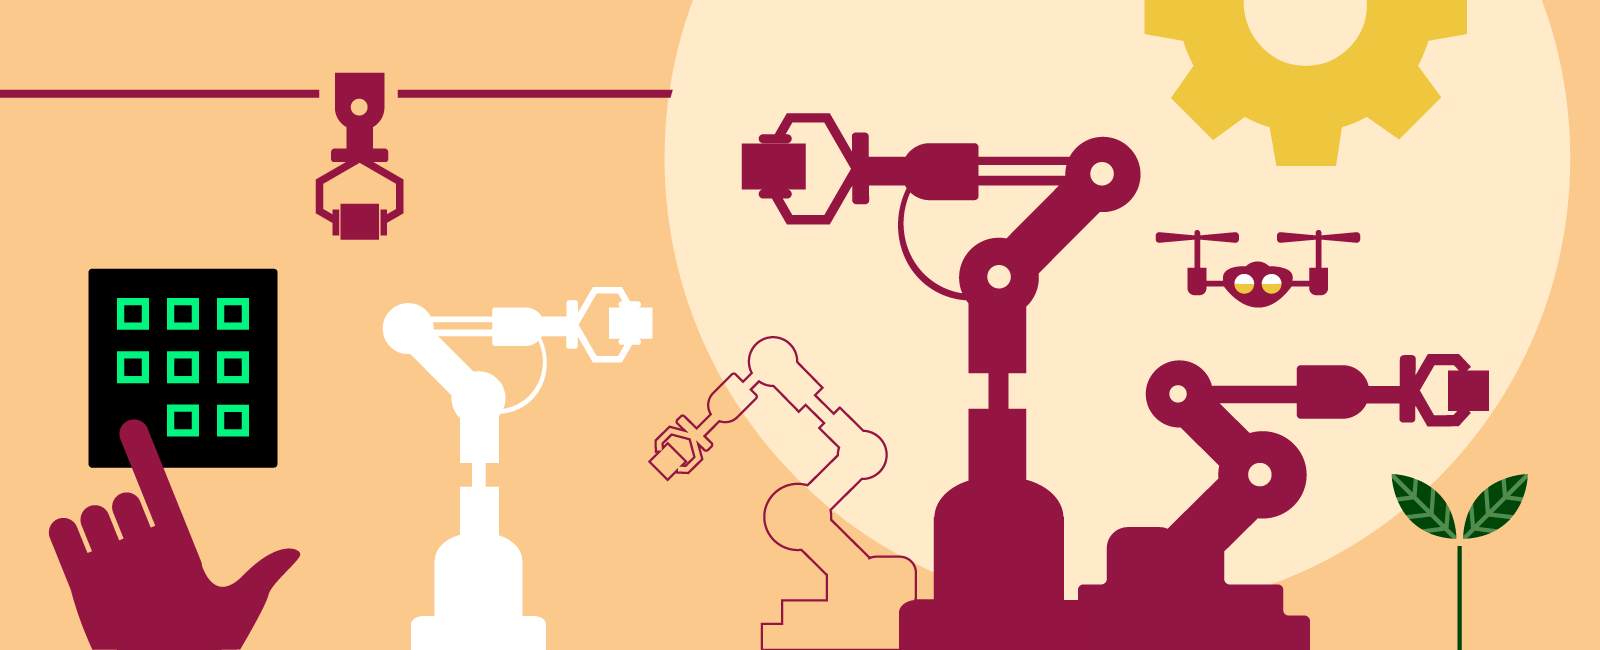 illustration with robots